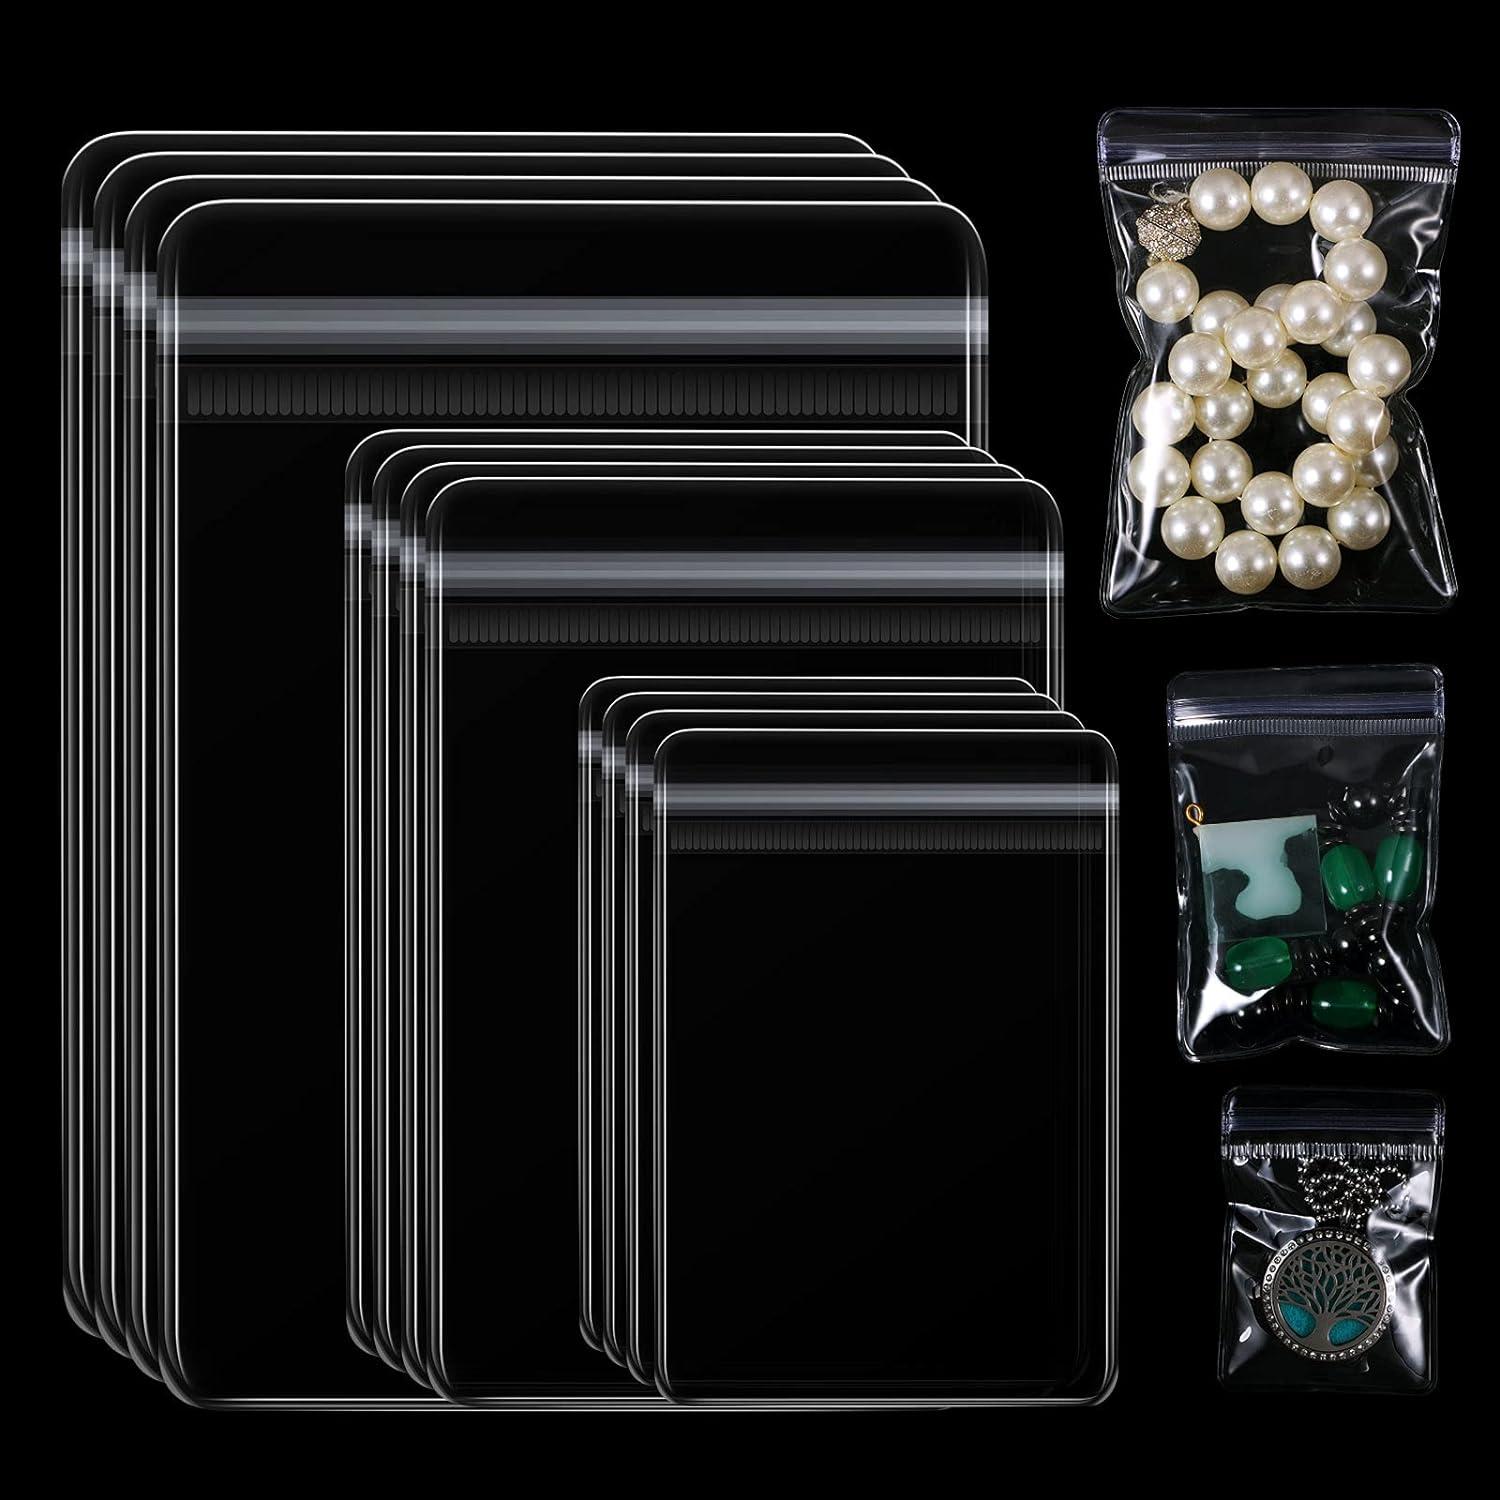 200 Pieces Clear PVC Jewelry Plastic Transparent Bags Zipper Storage Jewelry  Bag